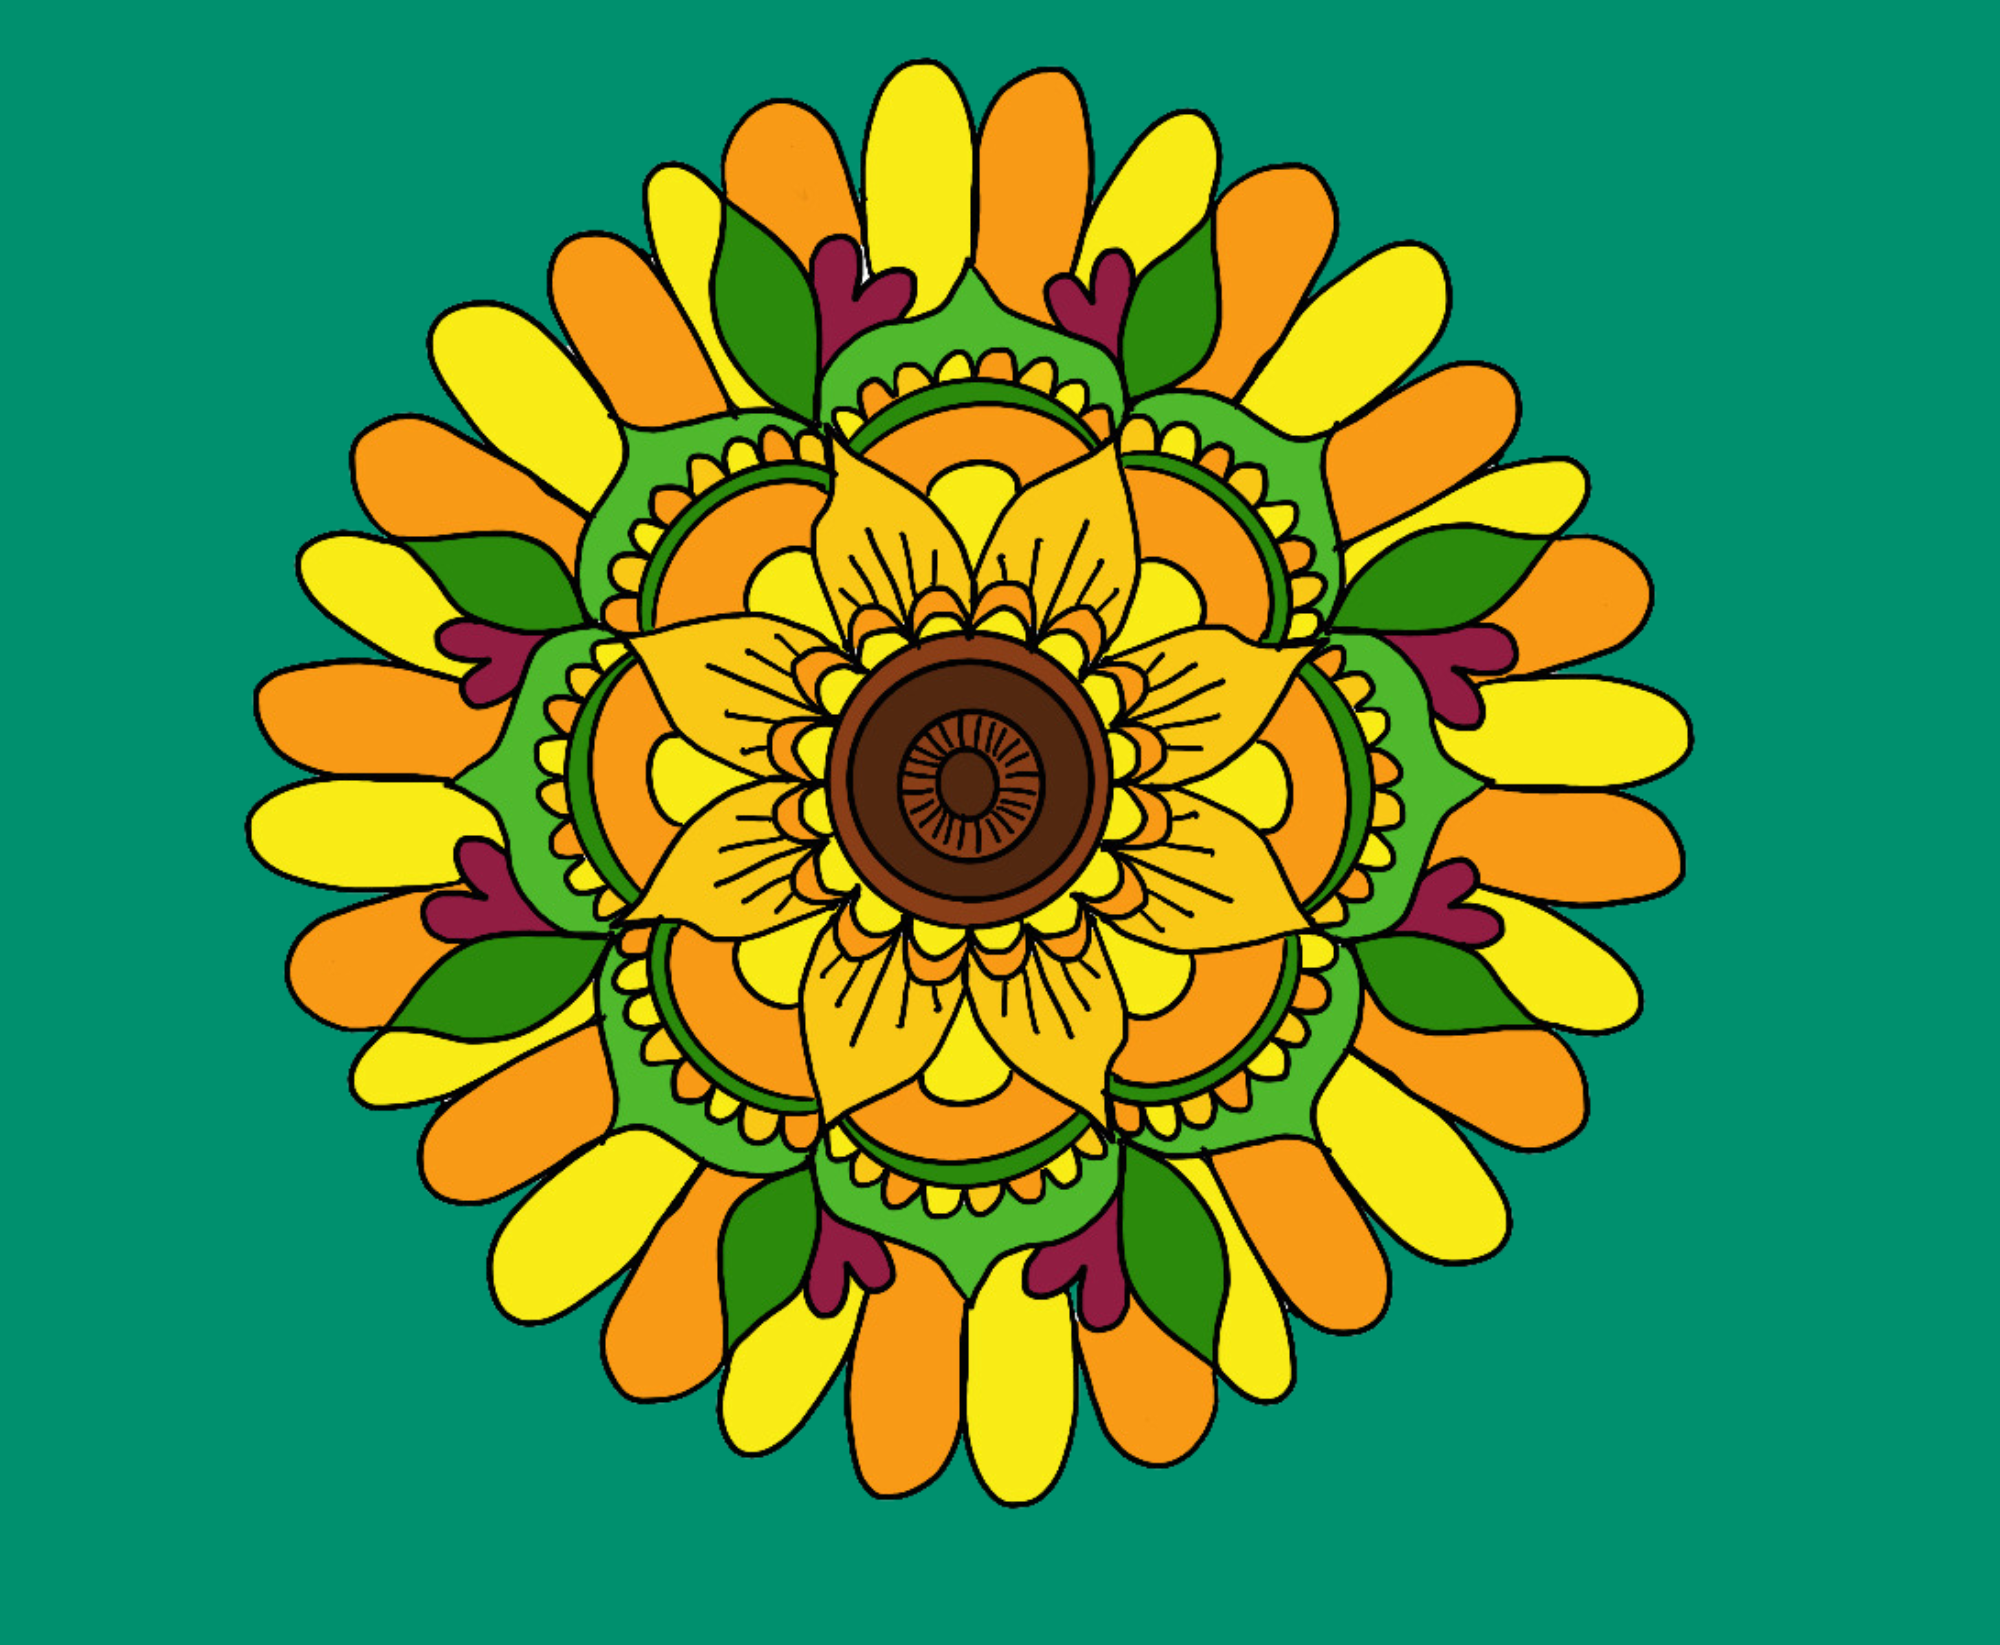 Digital illustration of a sunflower in a mandala style